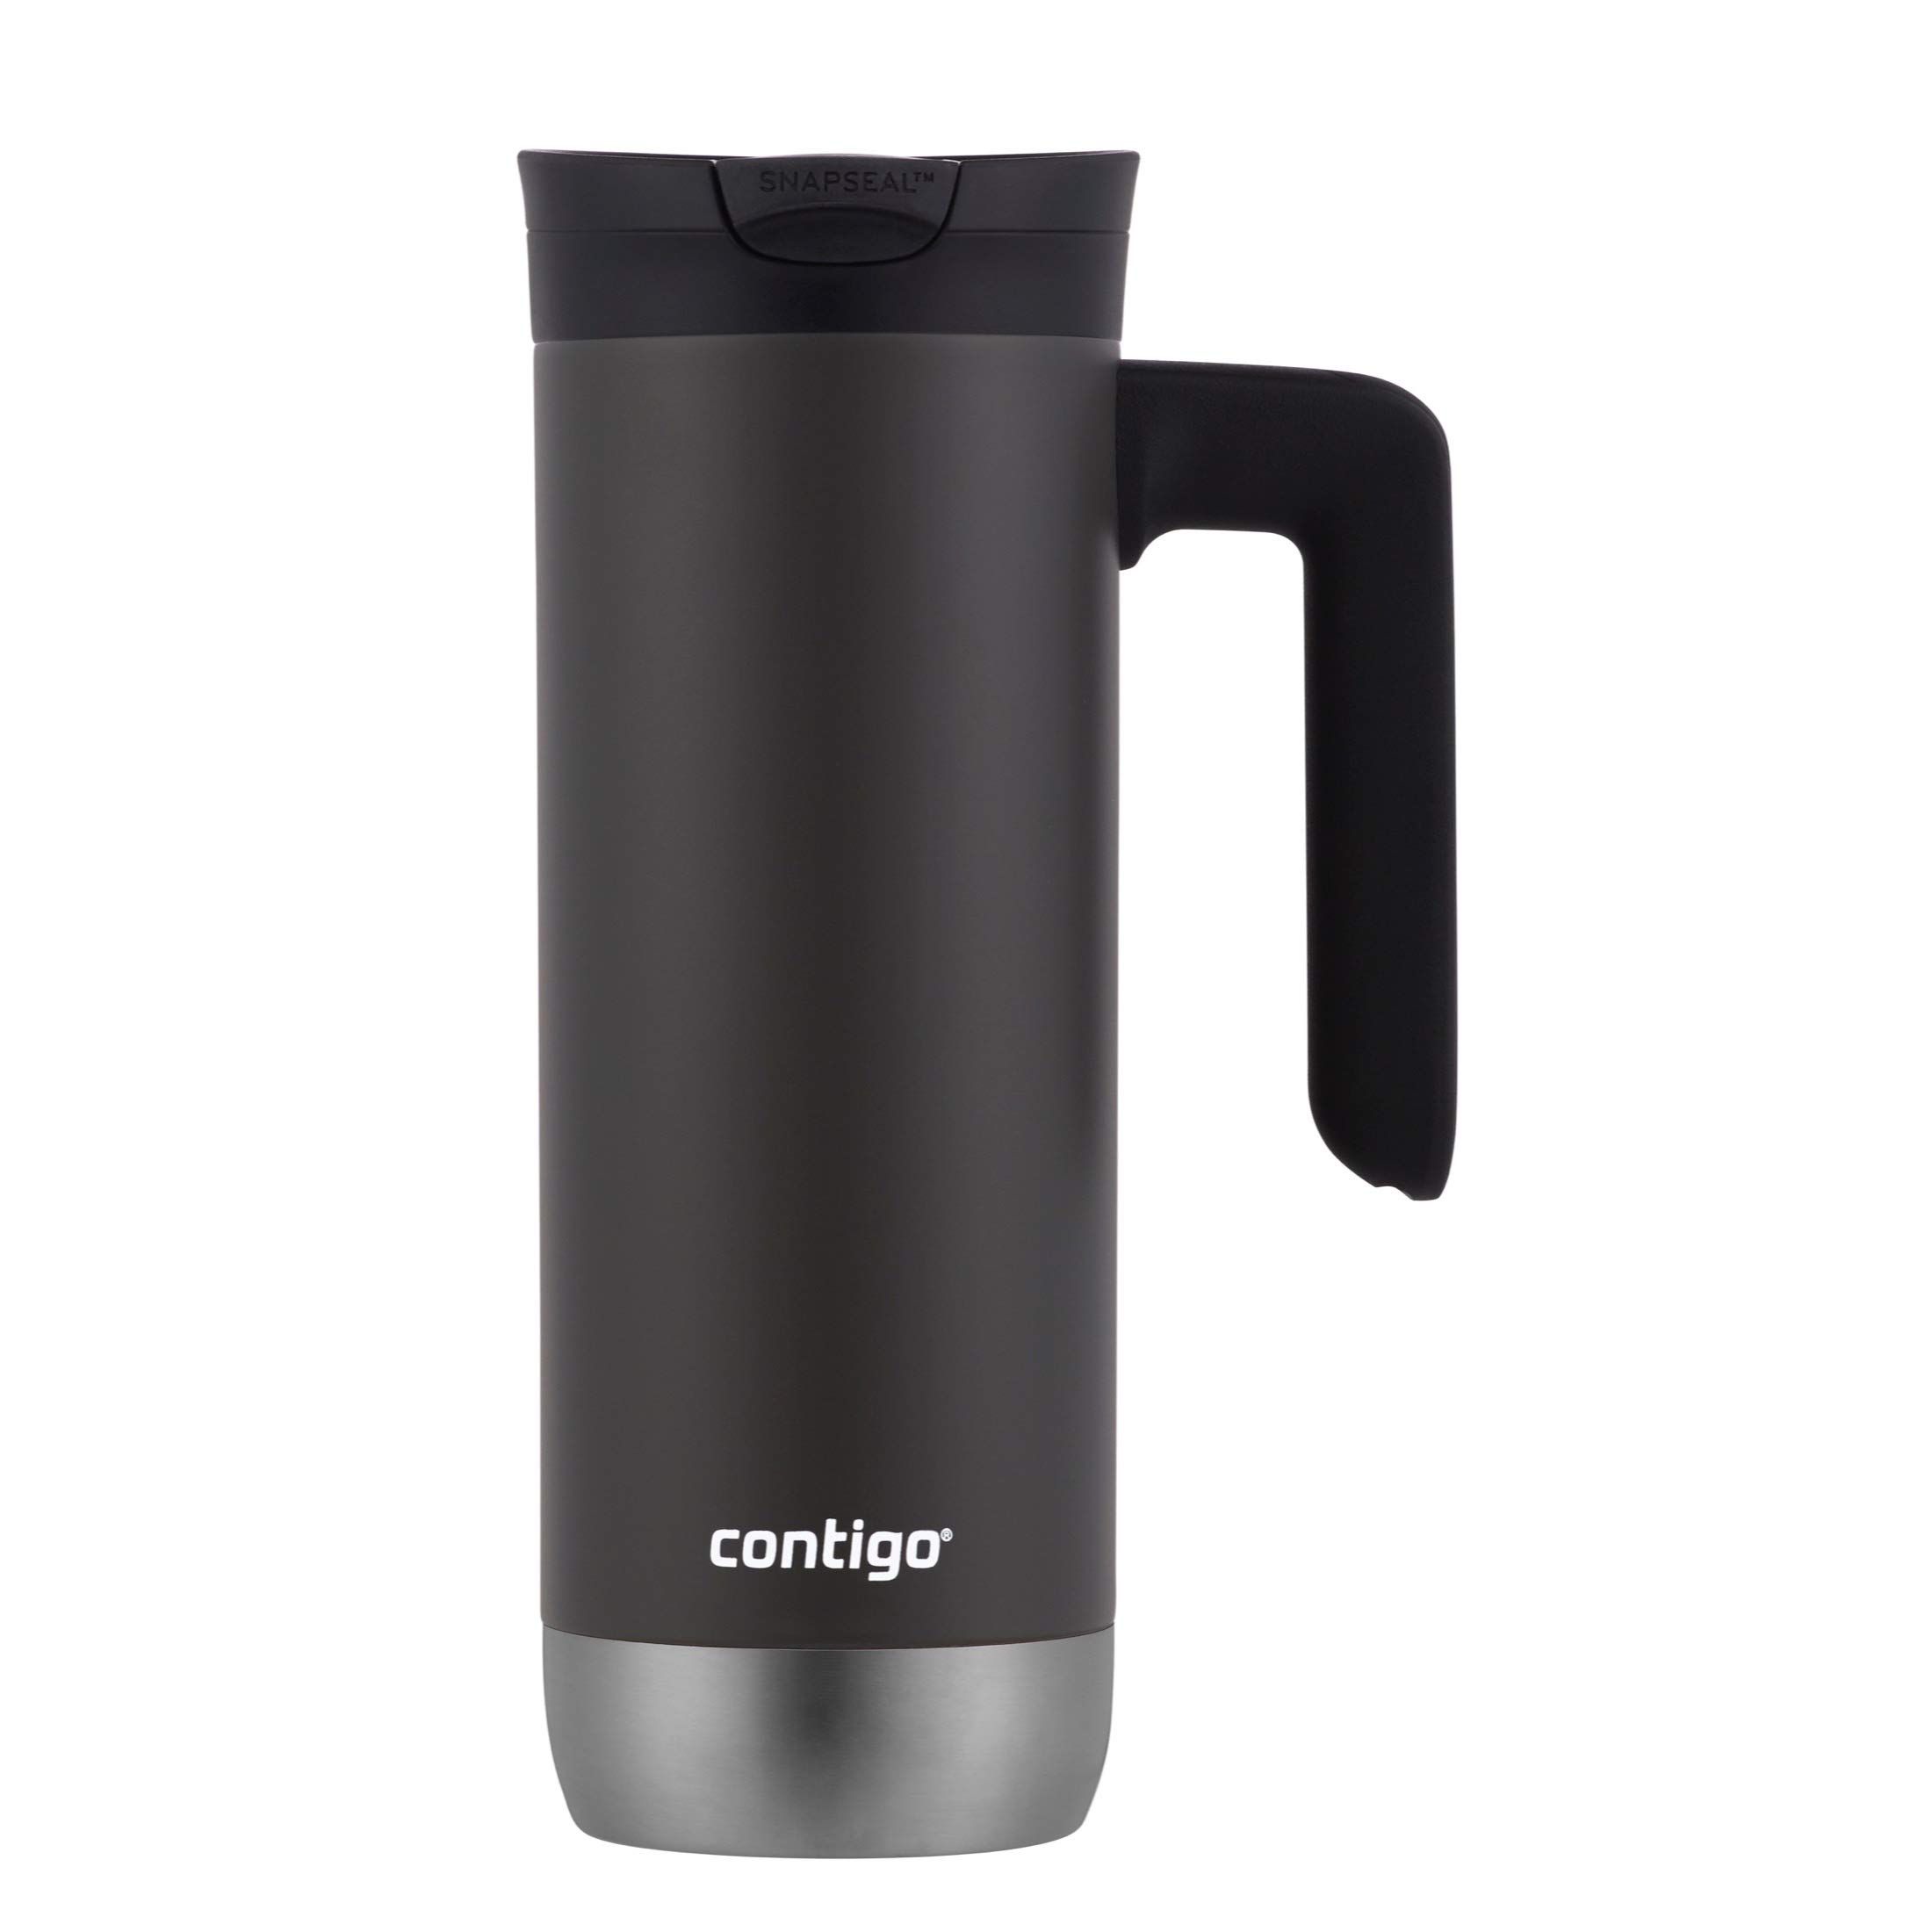 Contigo Snapseal Insulated Travel Mug, 20 oz, Sake | Amazon (US)